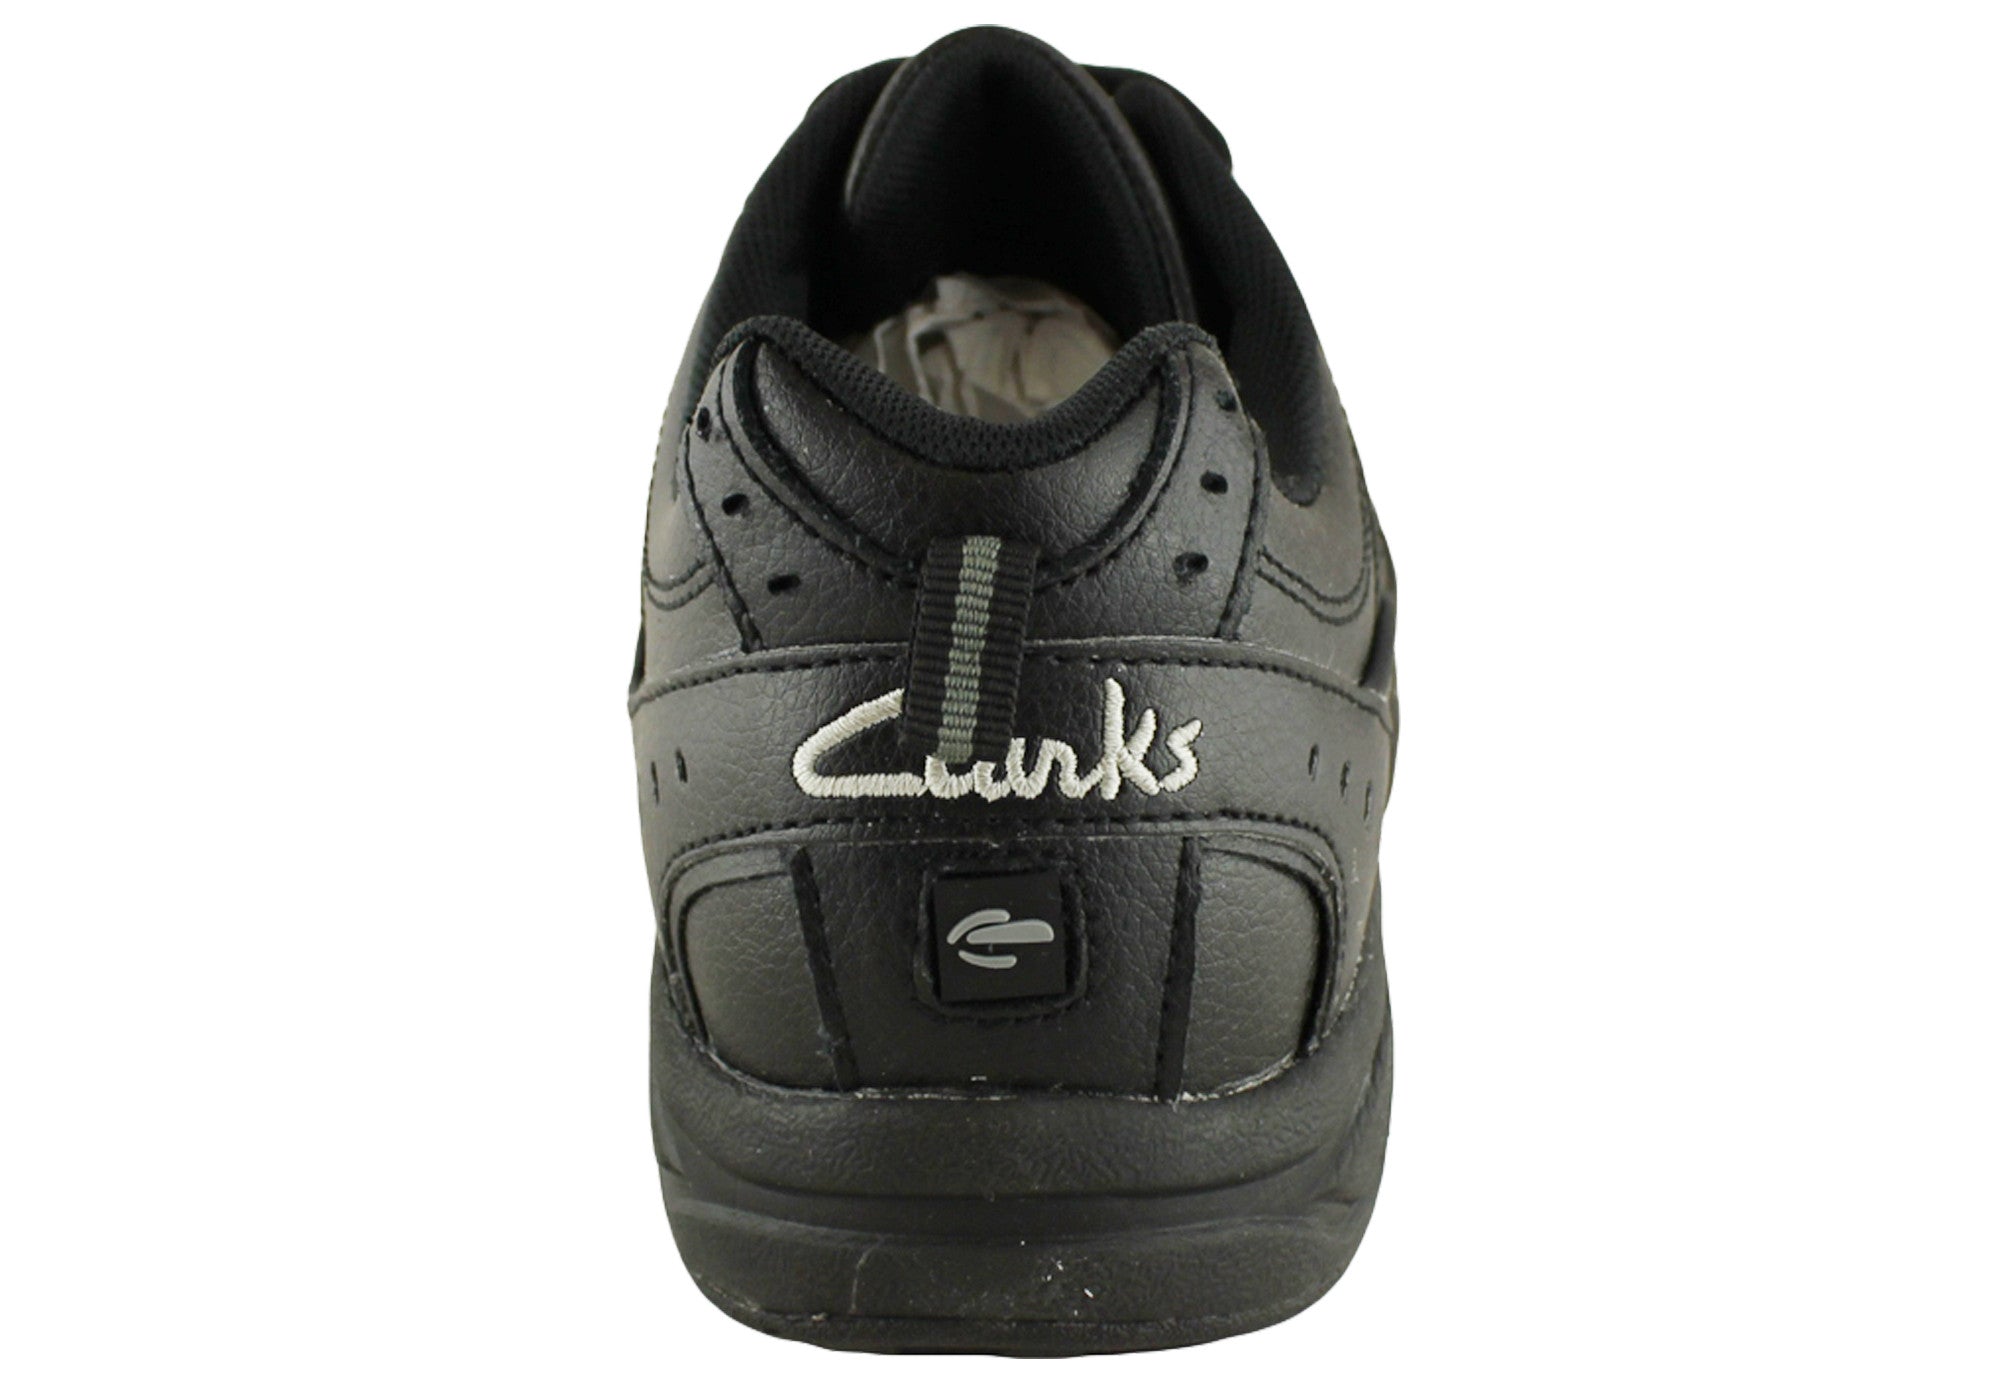 Clarks Vancouver Kids Lace Up Athletic Shoes